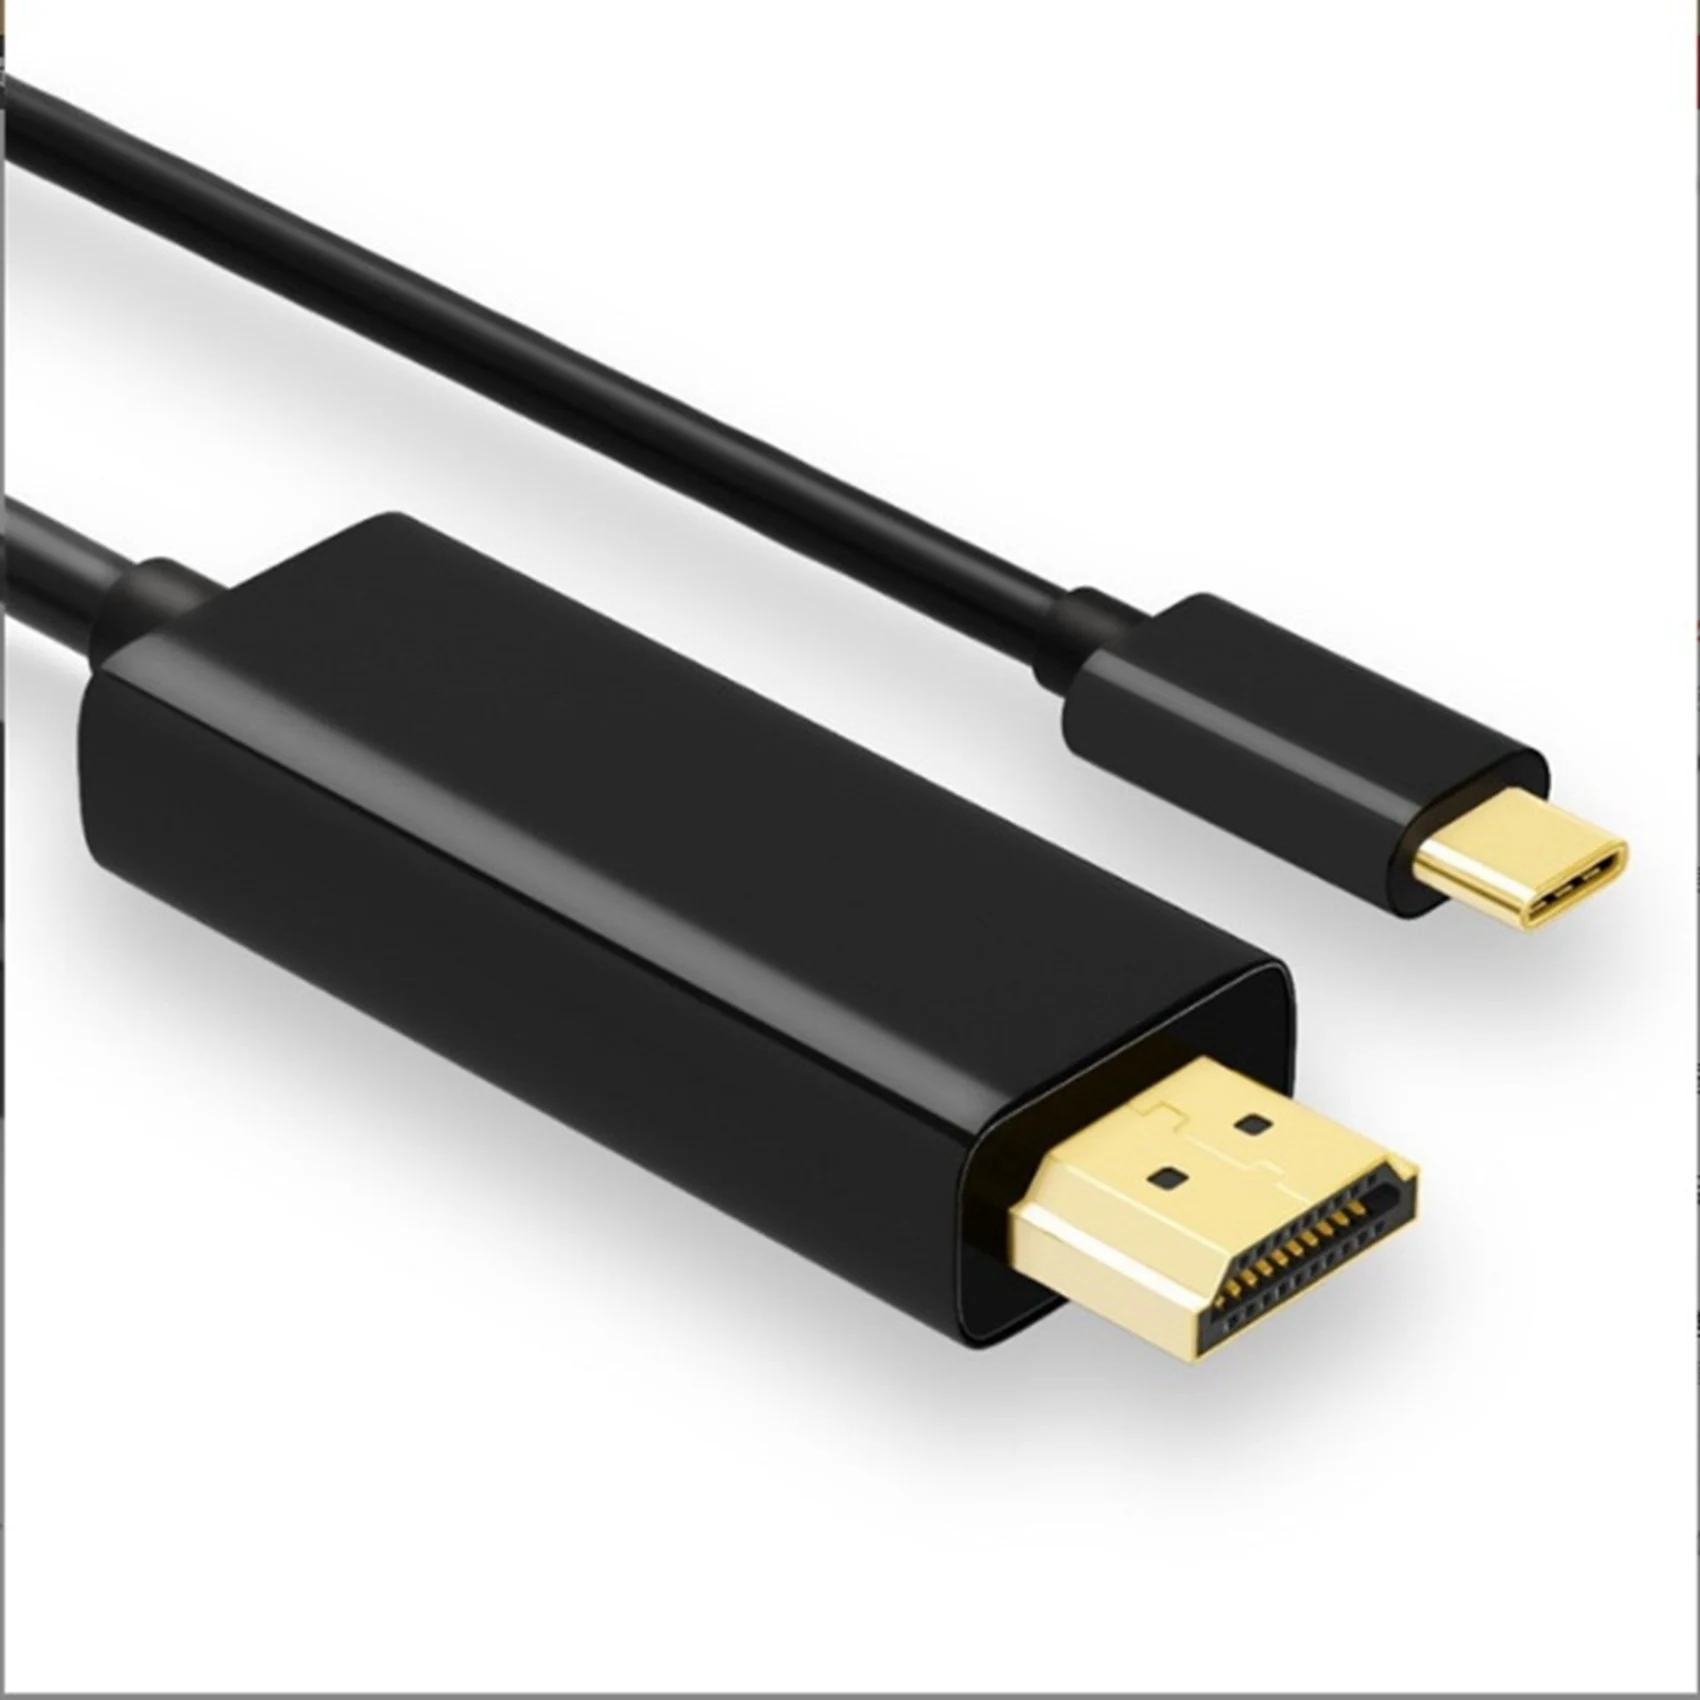 Tpc кабель. HDMI кабель 4k 60hz. USB C HDMI 4k кабель. Адаптер 4k USB-C HDMI. Кабель HDMI тайп си.